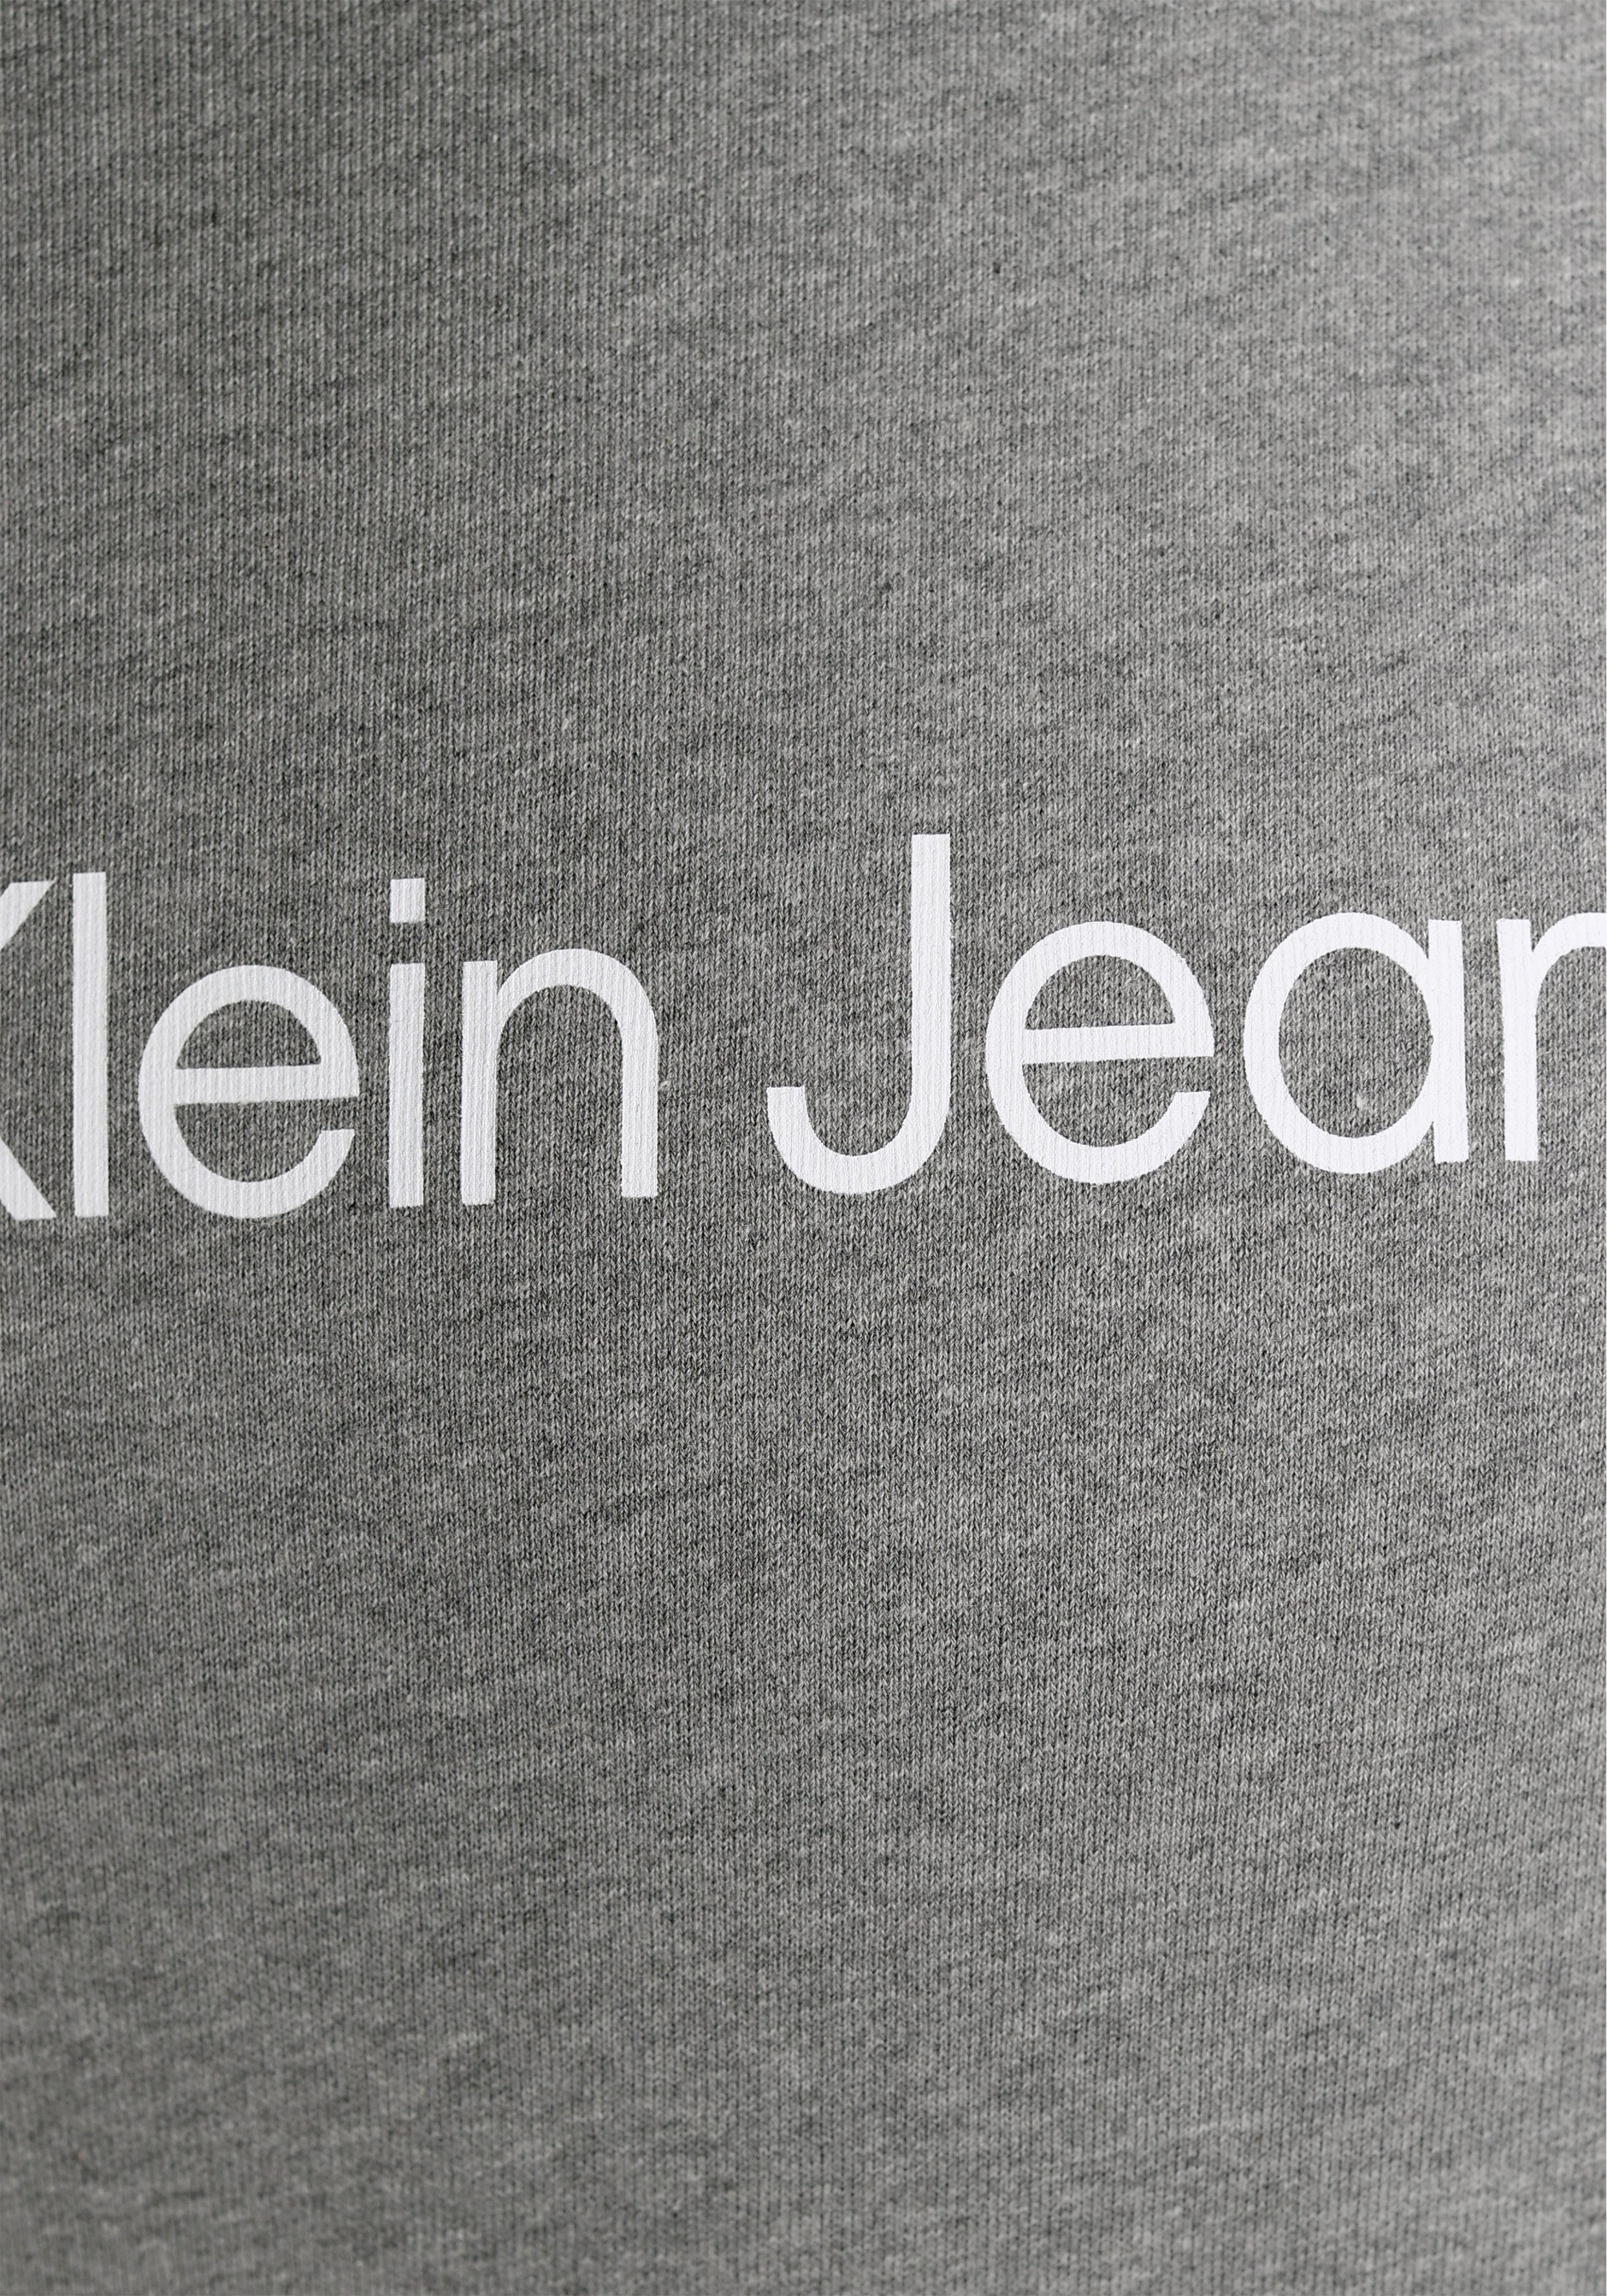 Jeans Heather Calvin Klein CORE Grey HOODIE Kapuzensweatshirt INSTITUTIONAL LOGO Mid